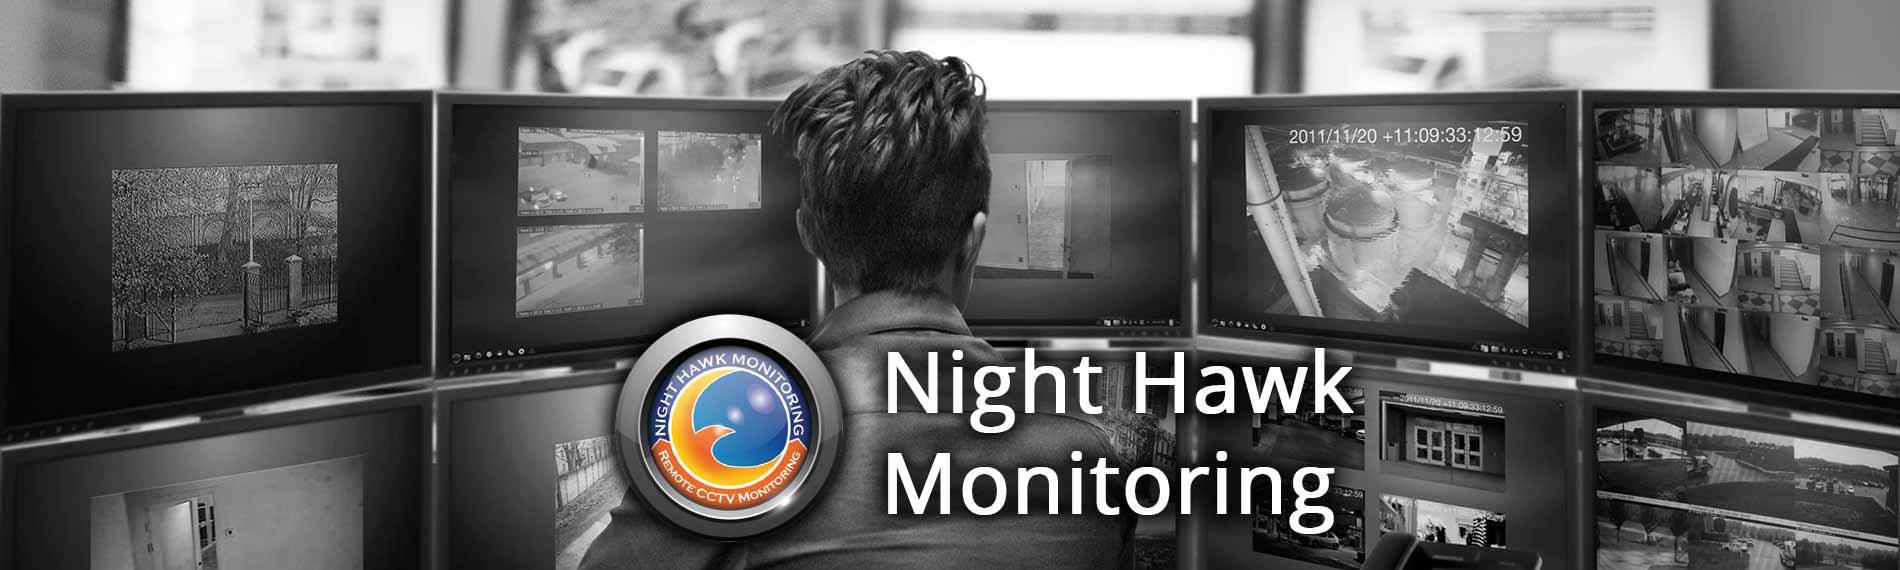 PHILADELPHIA REMOTE VIDEO SURVEILLANCE LIVE SECURITY CAMERAS MONITORING SYSTEM SERVICES COMPANY CCTV MONITORING PHILADELPHIA